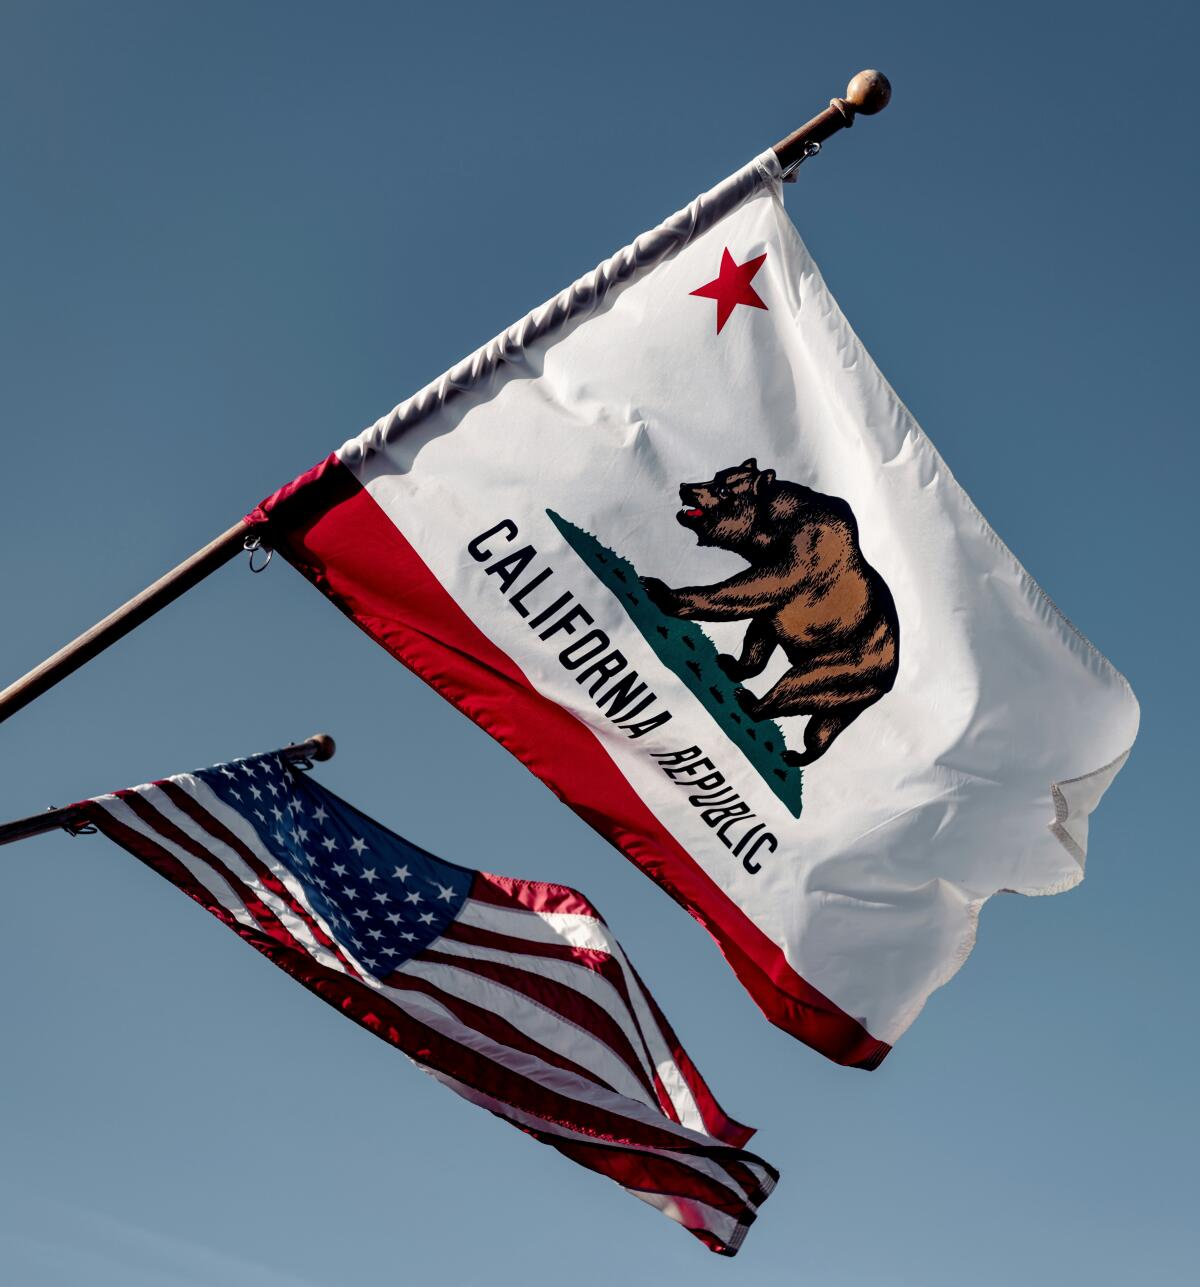 California's state flag flies next to the U.S. flag